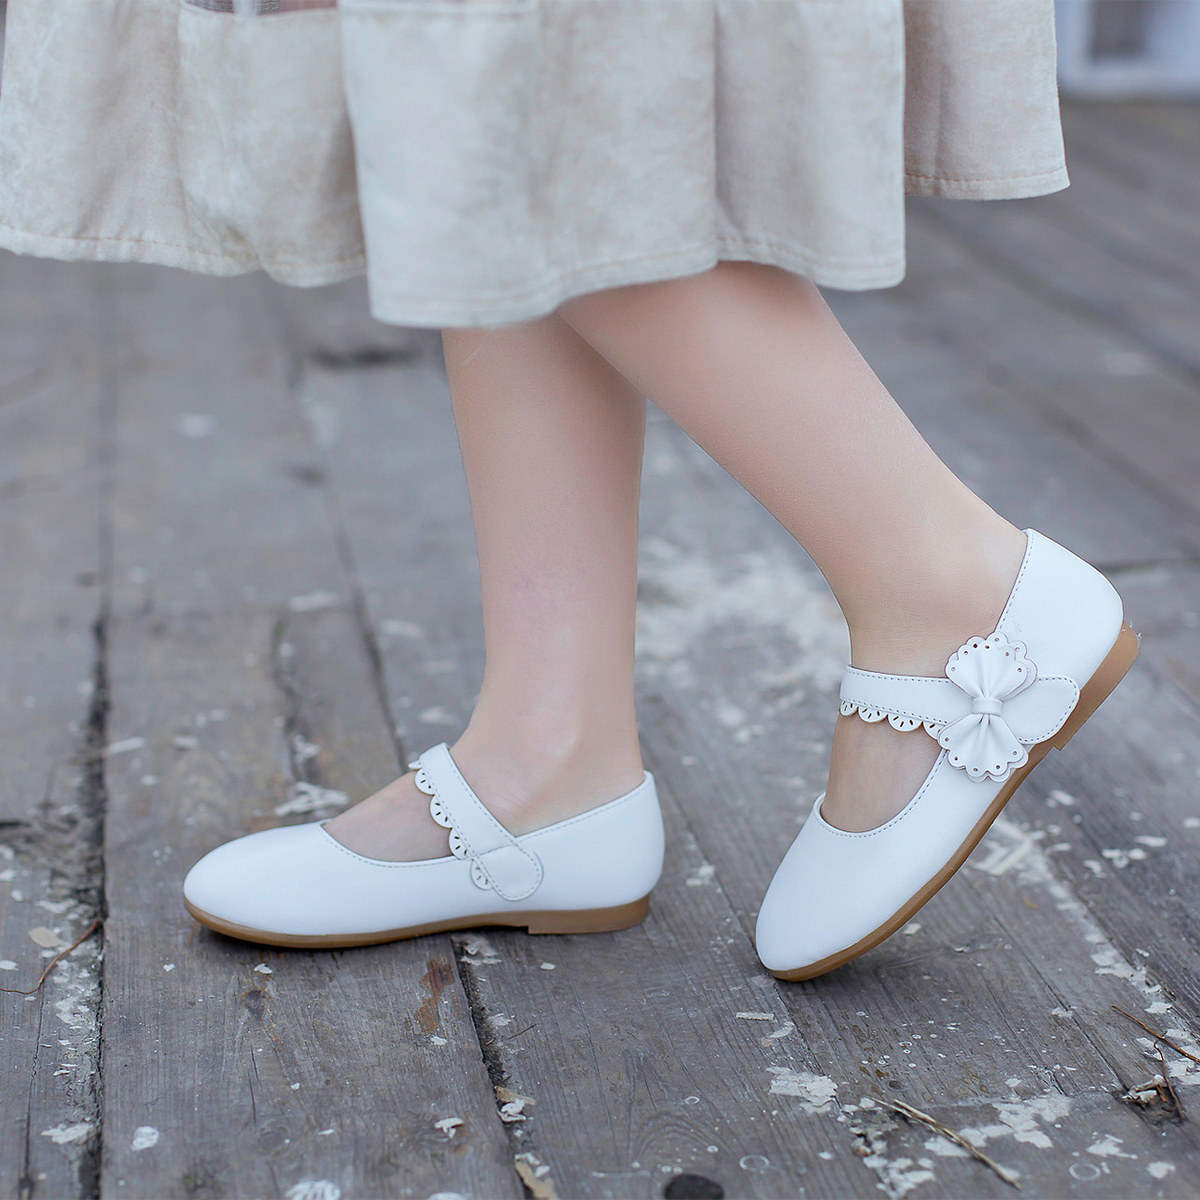 Hawee Ballet Flat Mary Jane Shoes Bowknot Princess Dress Shoes (Toddler Girls & Little Girls & Big Girls) - image 5 of 6